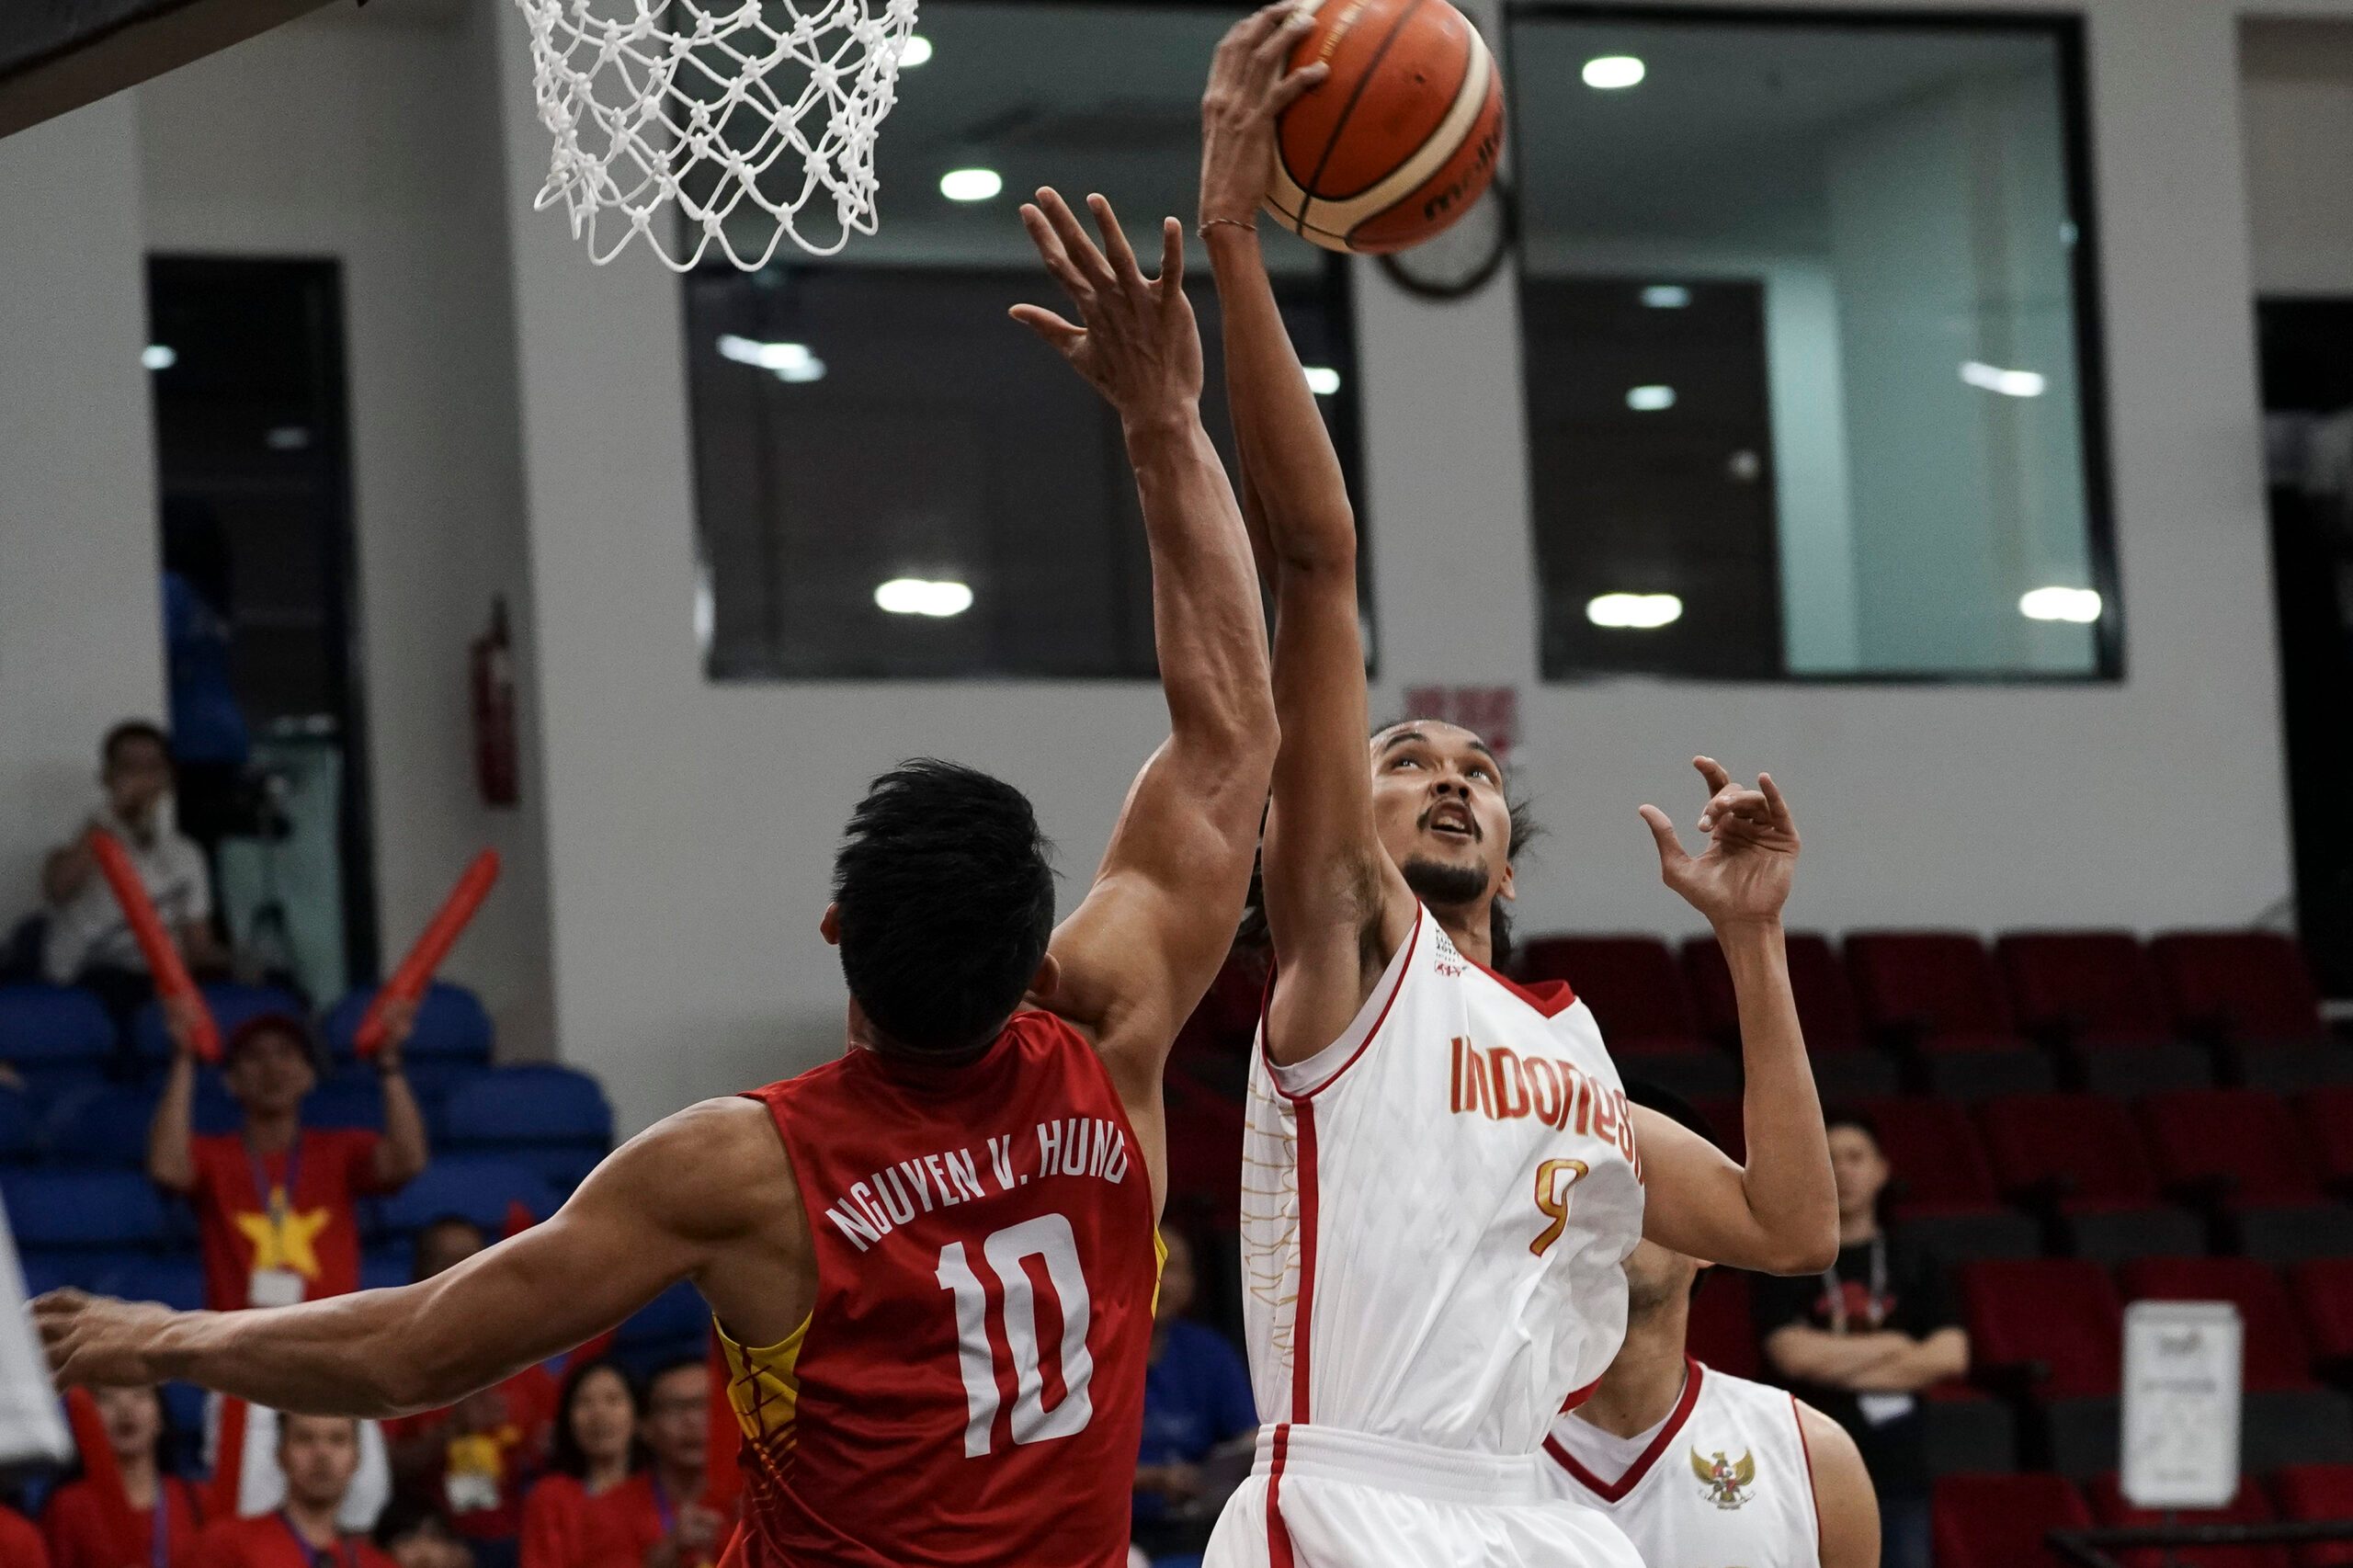 Hadapi Filipina di babak final, tim bola basket Indonesia diminta tenang